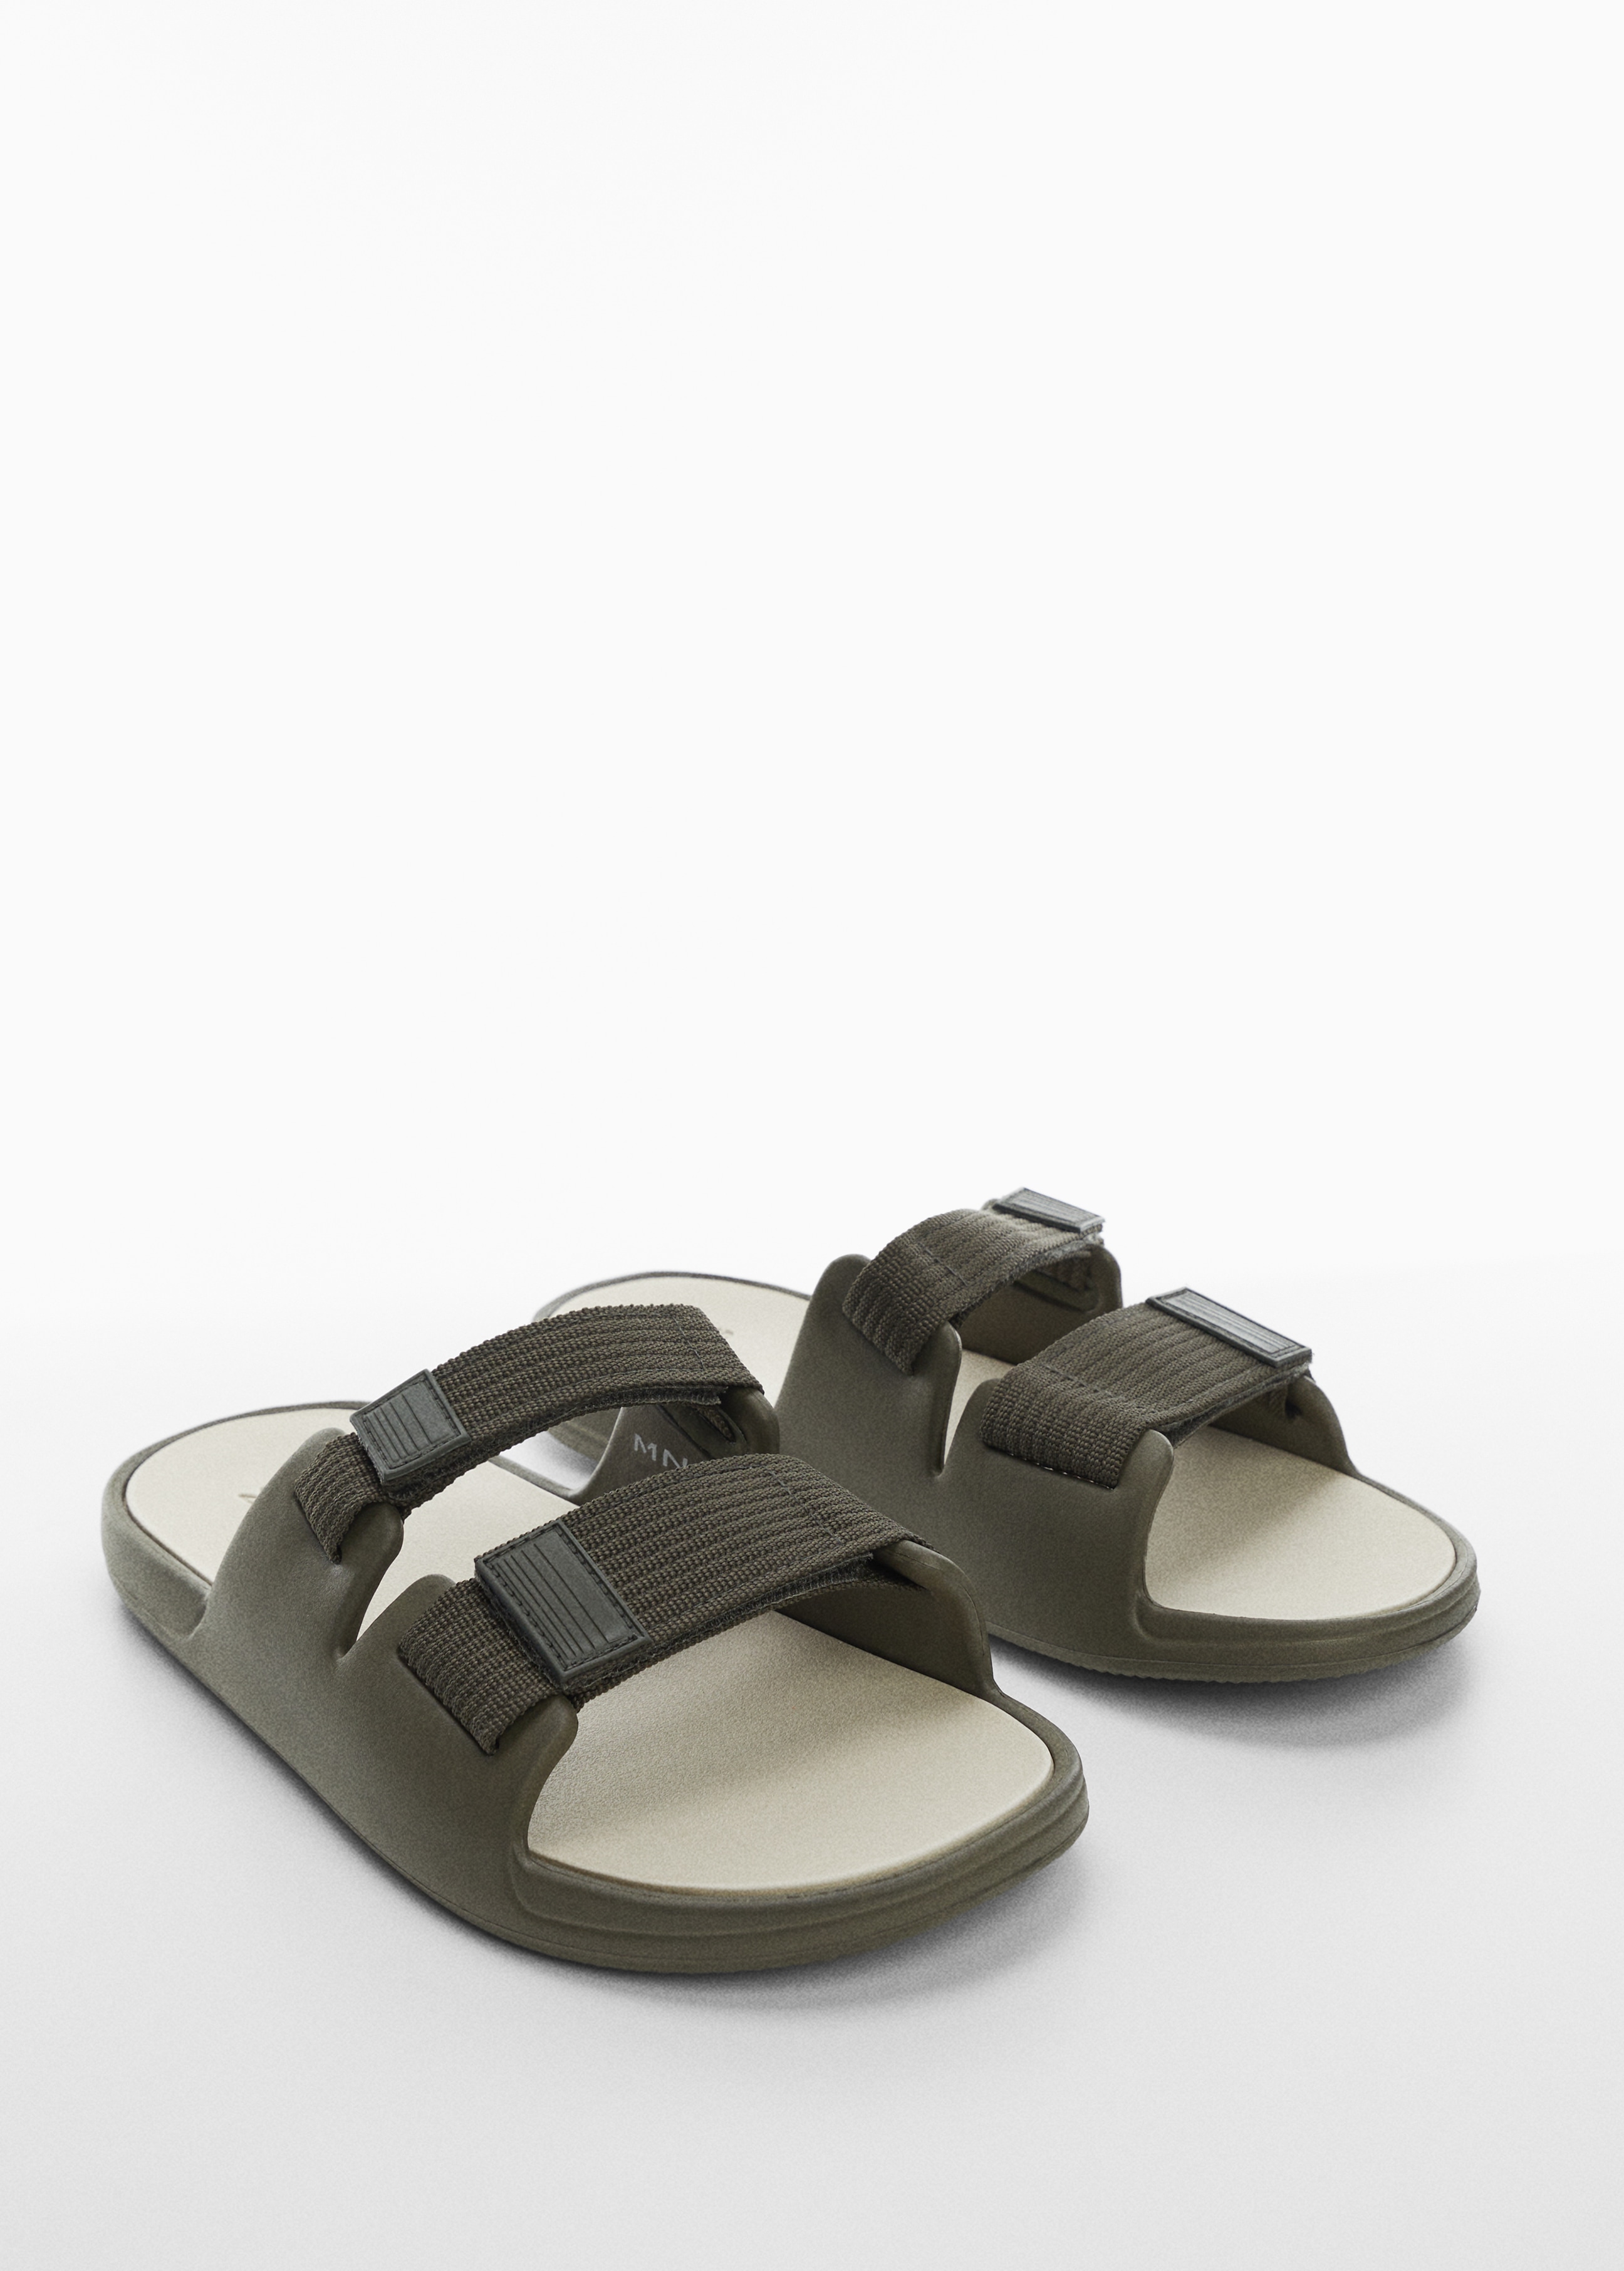 Velcro strap sandal - Medium plane